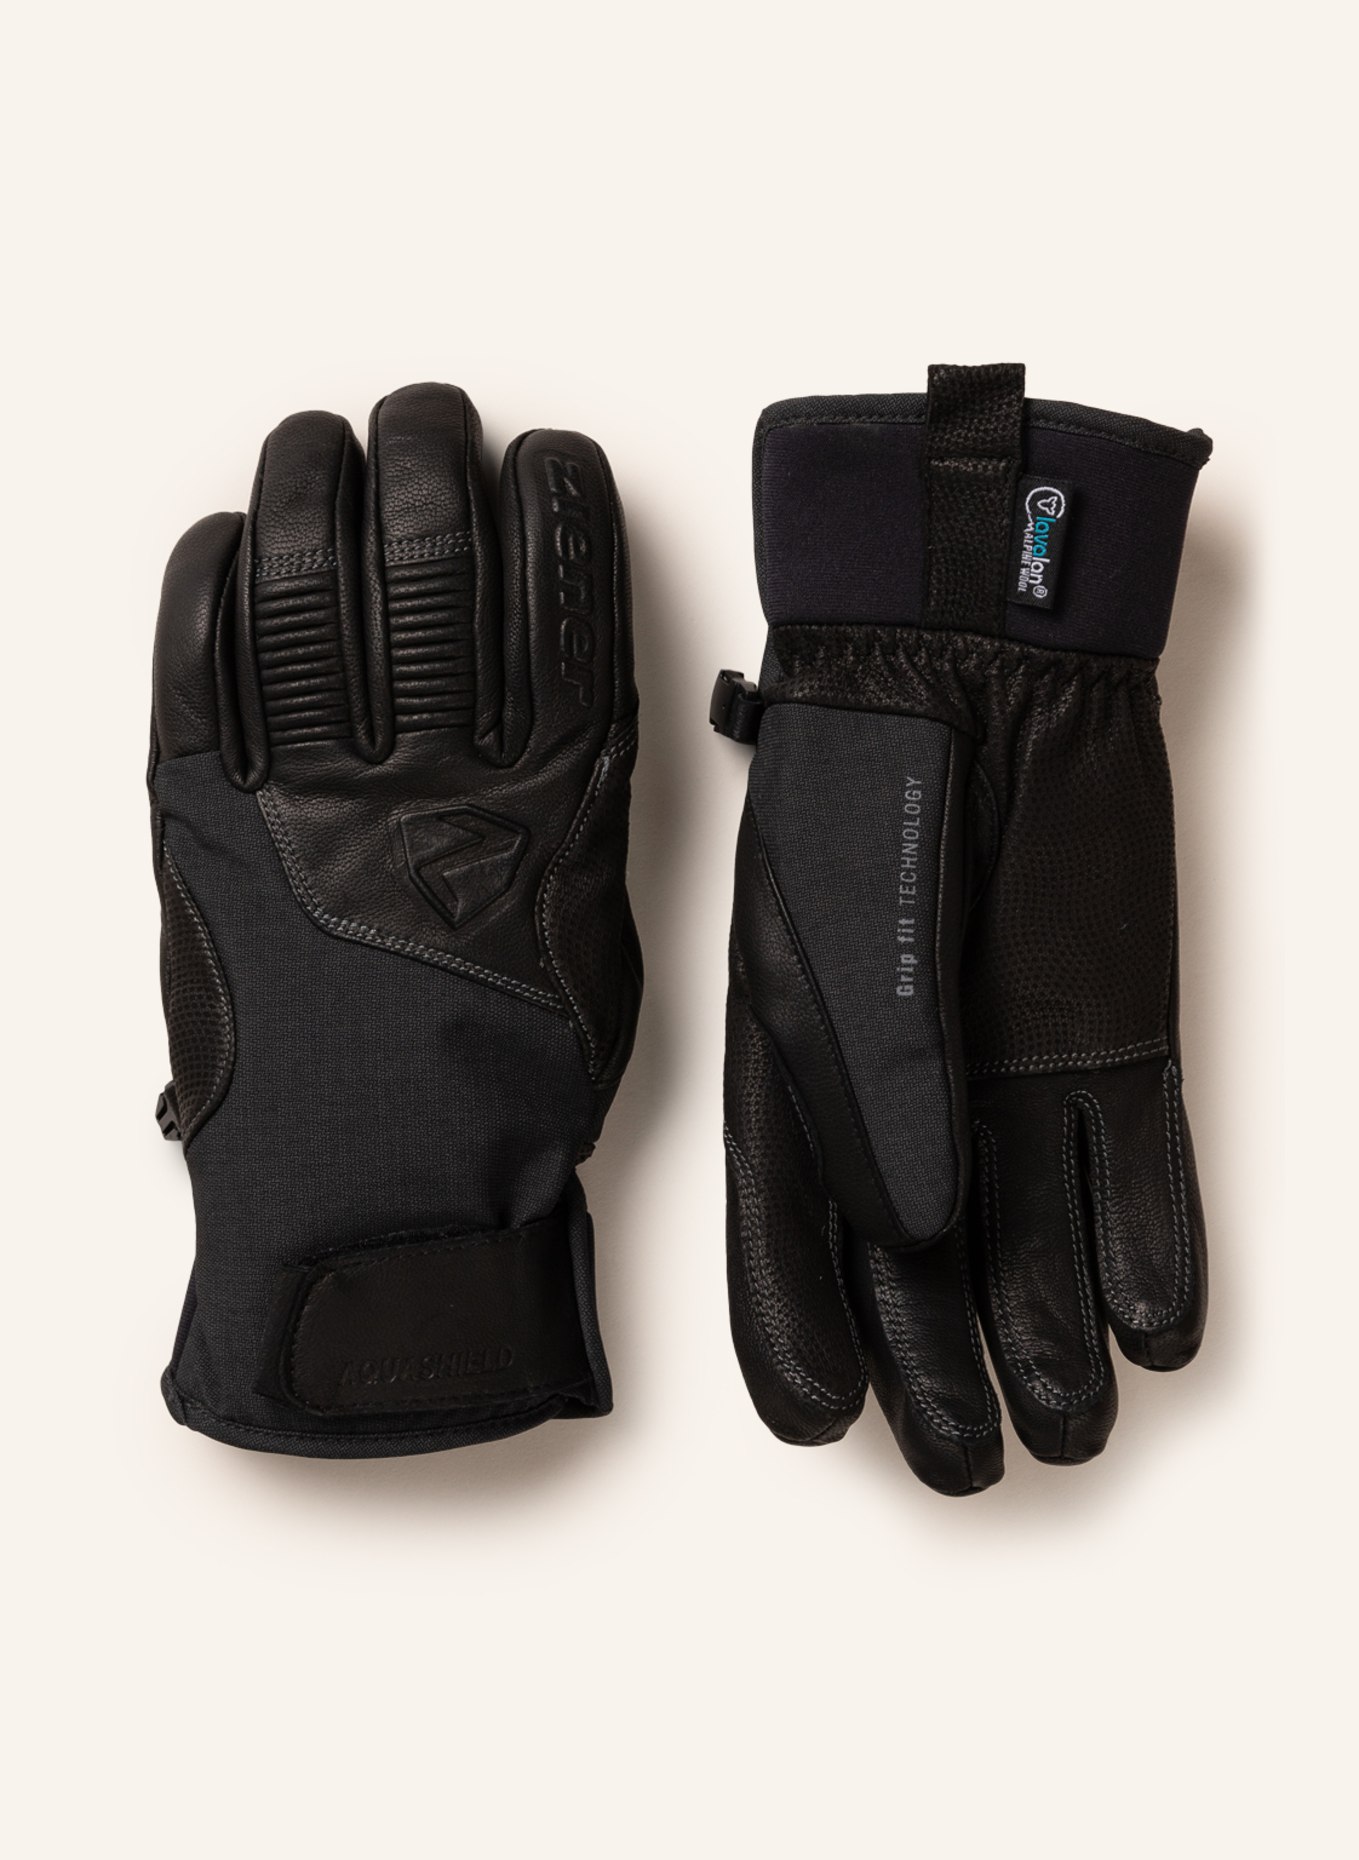 GANZENBERG gloves gray dark Ski black/ in ziener